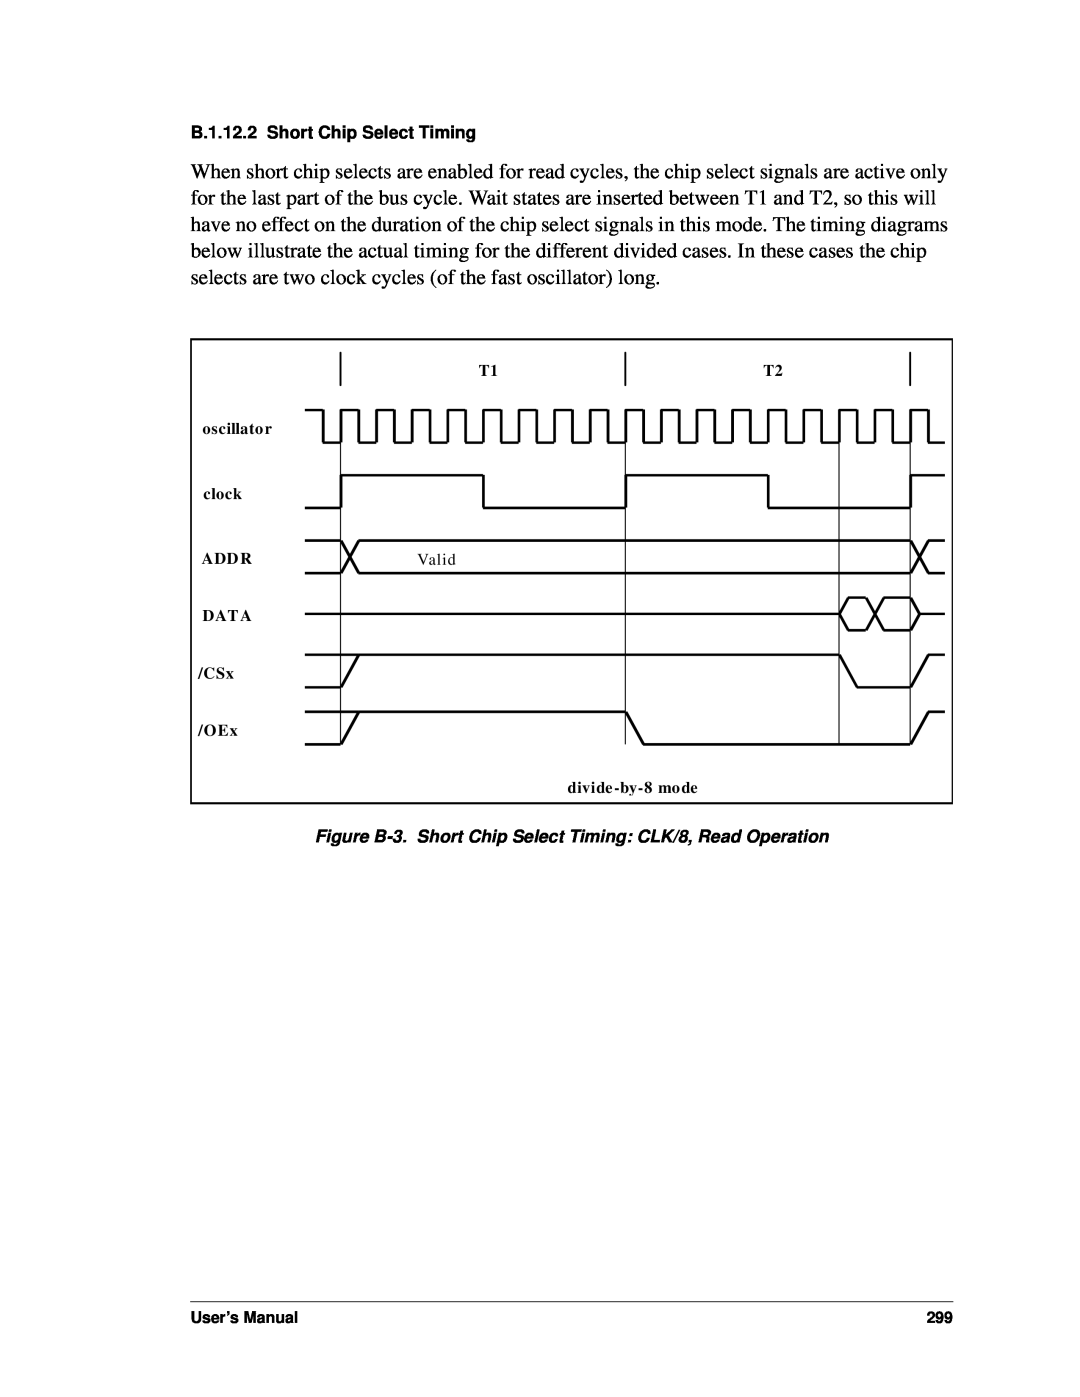 Jameco Electronics 3000, 2000 manual B.1.12.2 Short Chip Select Timing, User’s Manual 